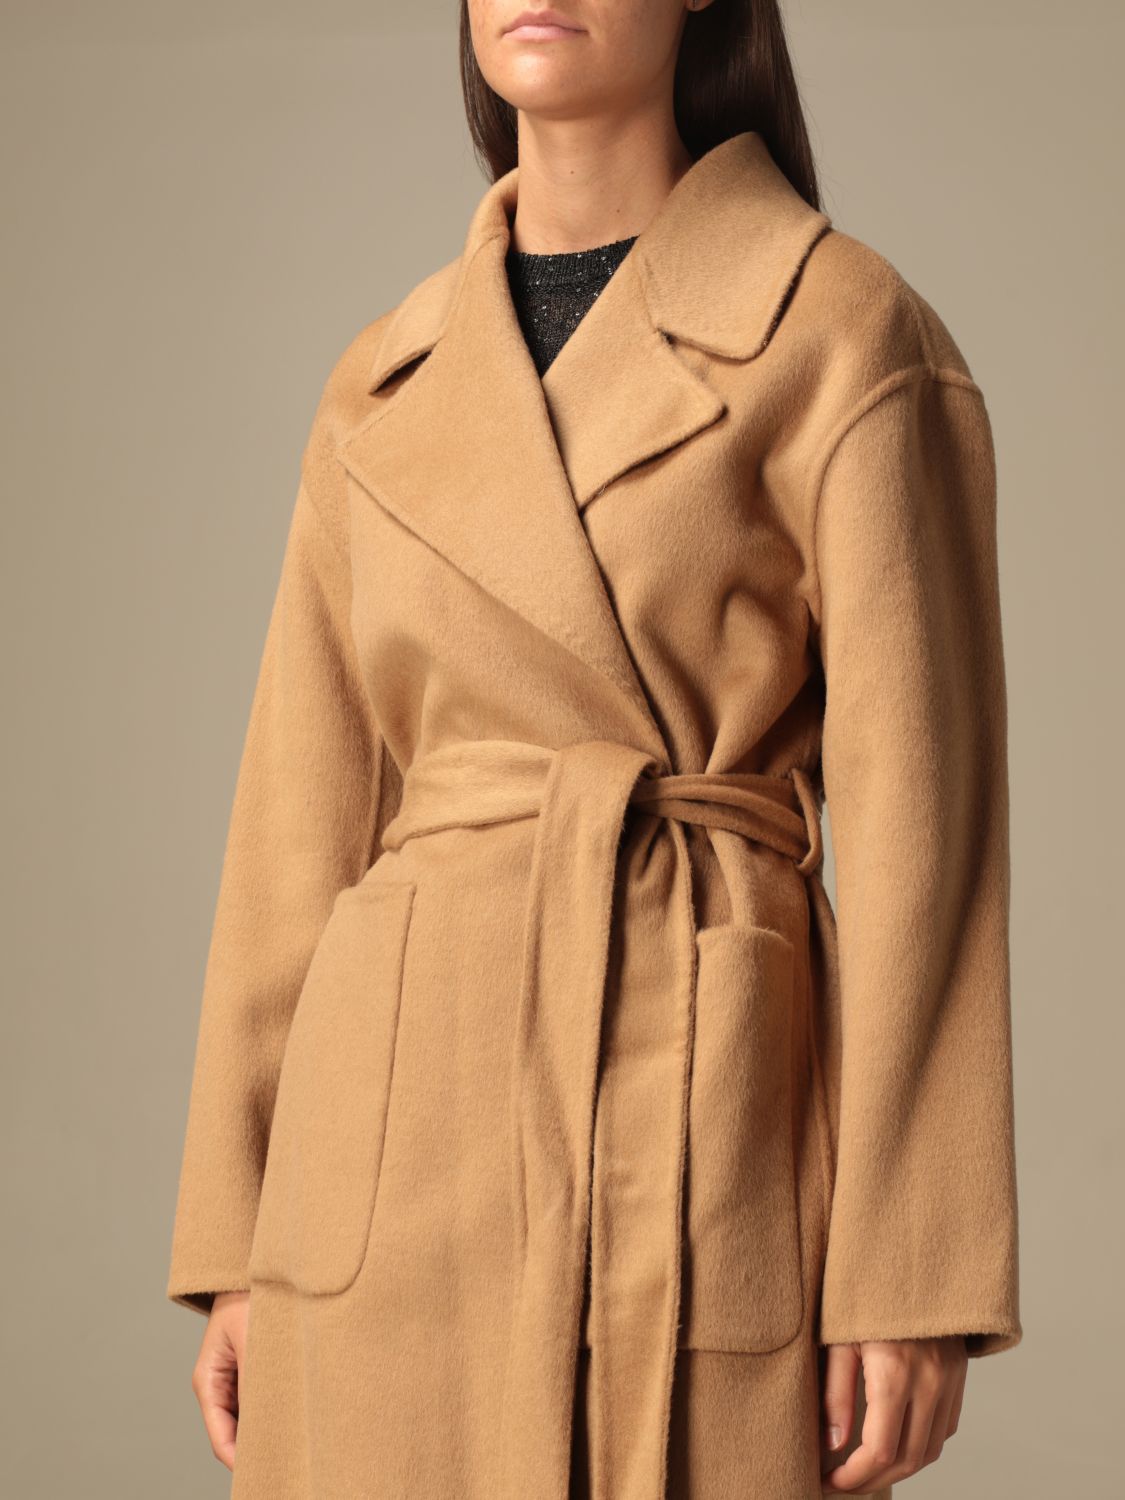 Michael Kors Womens Down Gray Black Coat  Lightweight Down Coat for Women   Packable Women Winter Coat  Zipper Closure Women Coat with Hood 2 Side  Pockets  Walmartcom